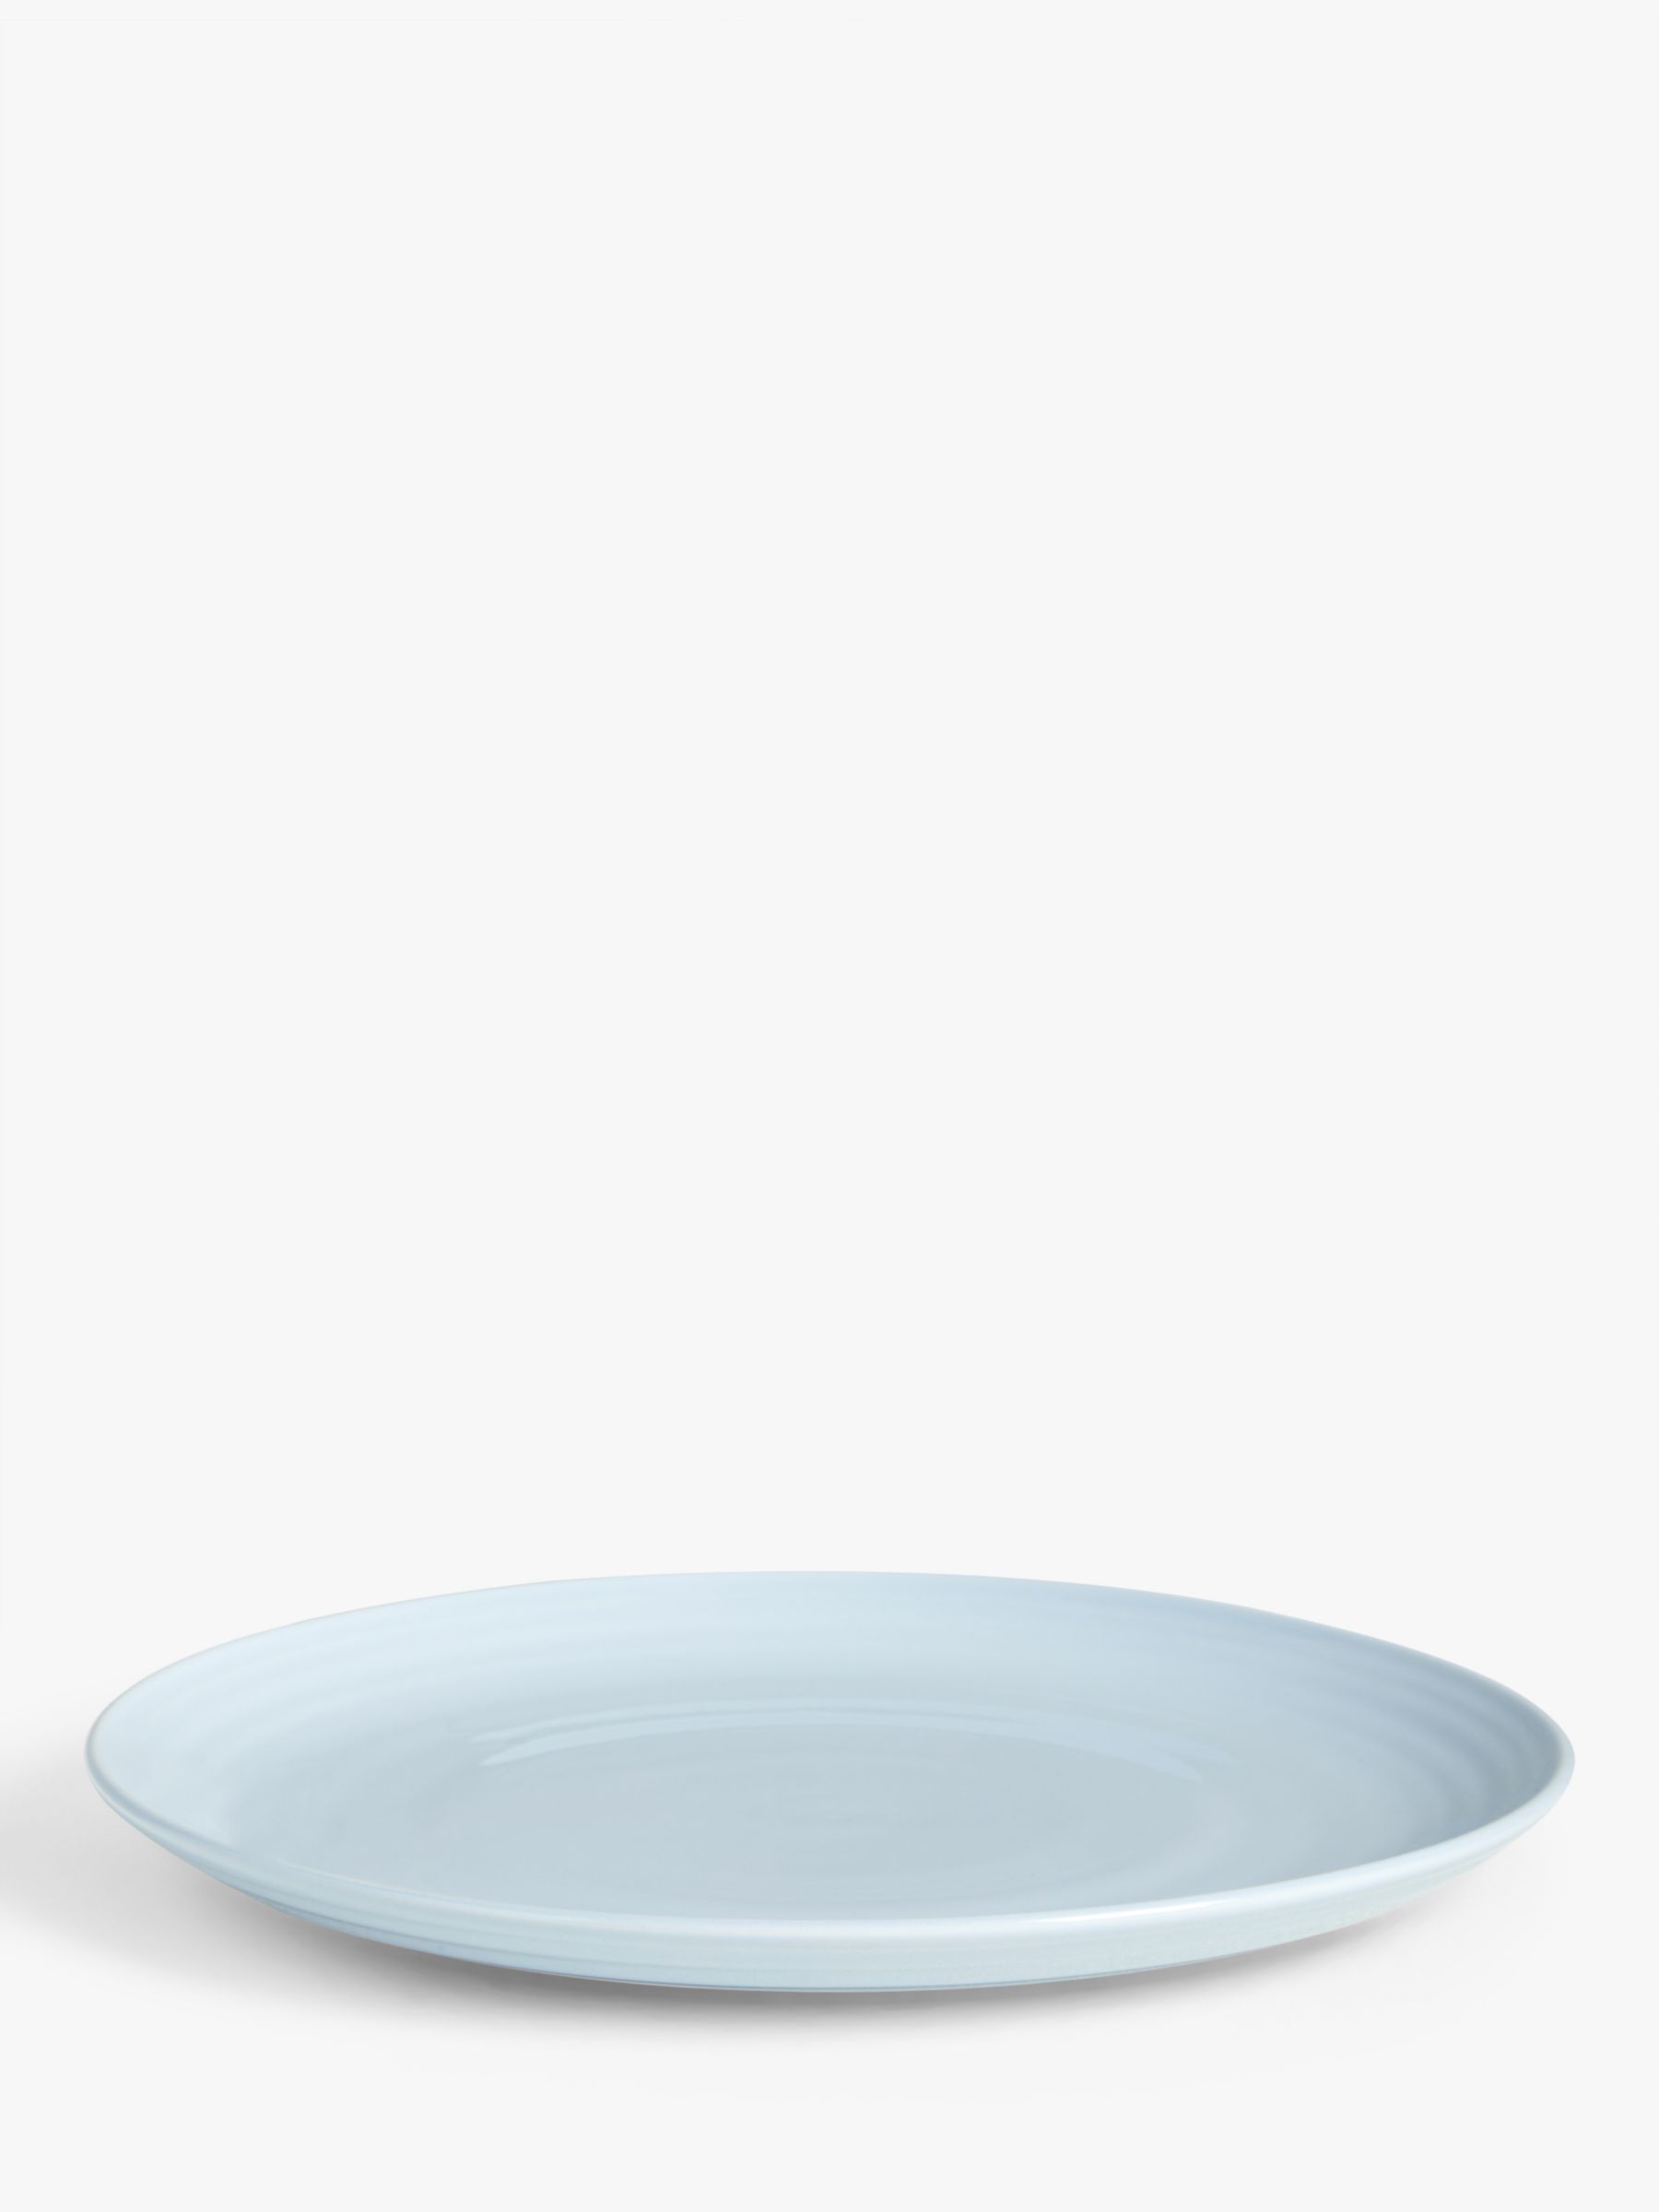 John Lewis & Partners Textured Stoneware Dinner Plate, 27cm, Blue